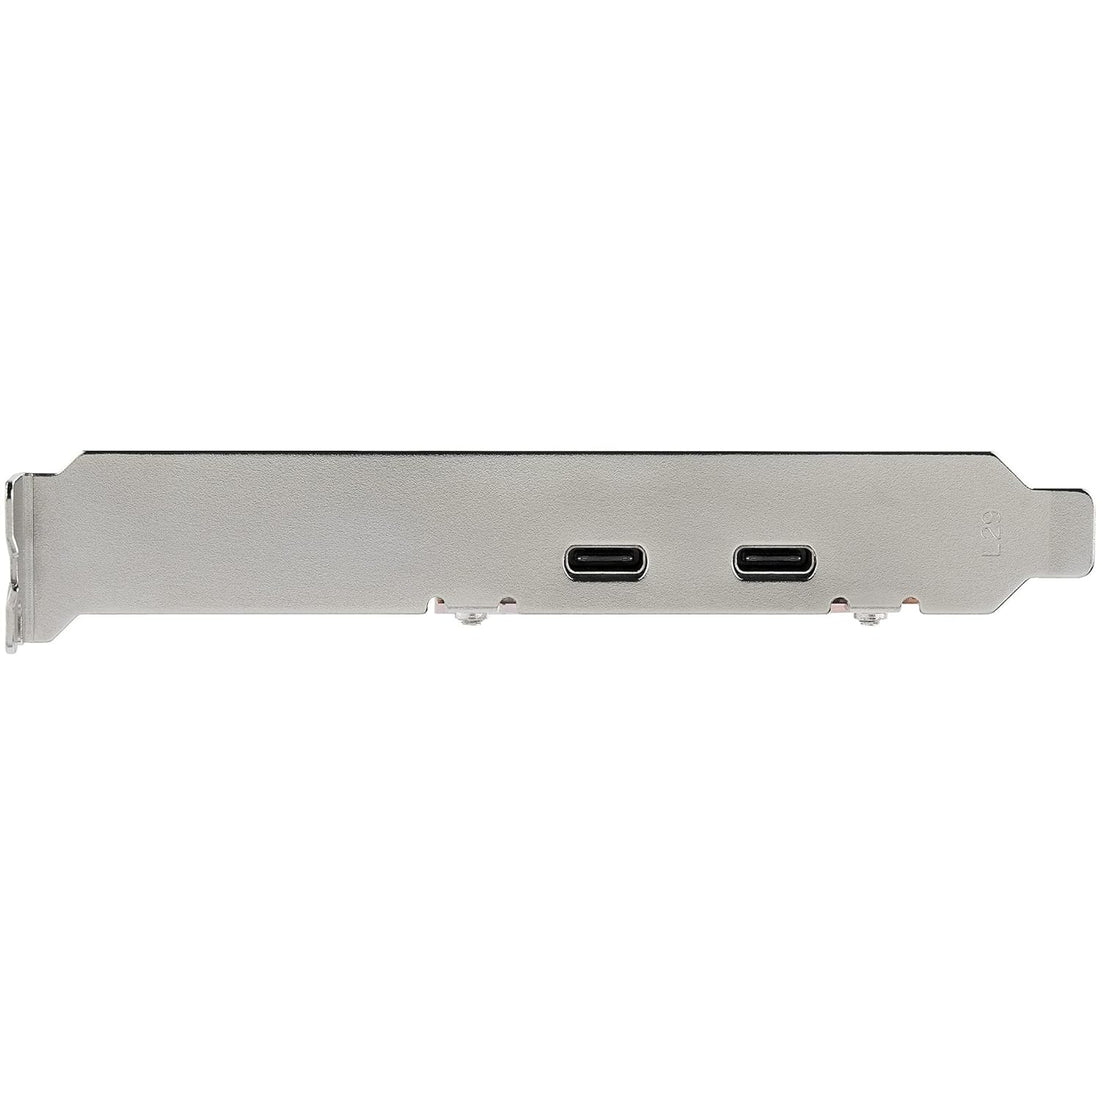 StarTech.com PCIe USB 3.1 Card - 2X USB C 3.1 Gen 2 10Gbps - PCIe Gen 3 x4 - ASM3142 Chipset - USB Type C PCI Express Card (PEXUSB312C3)